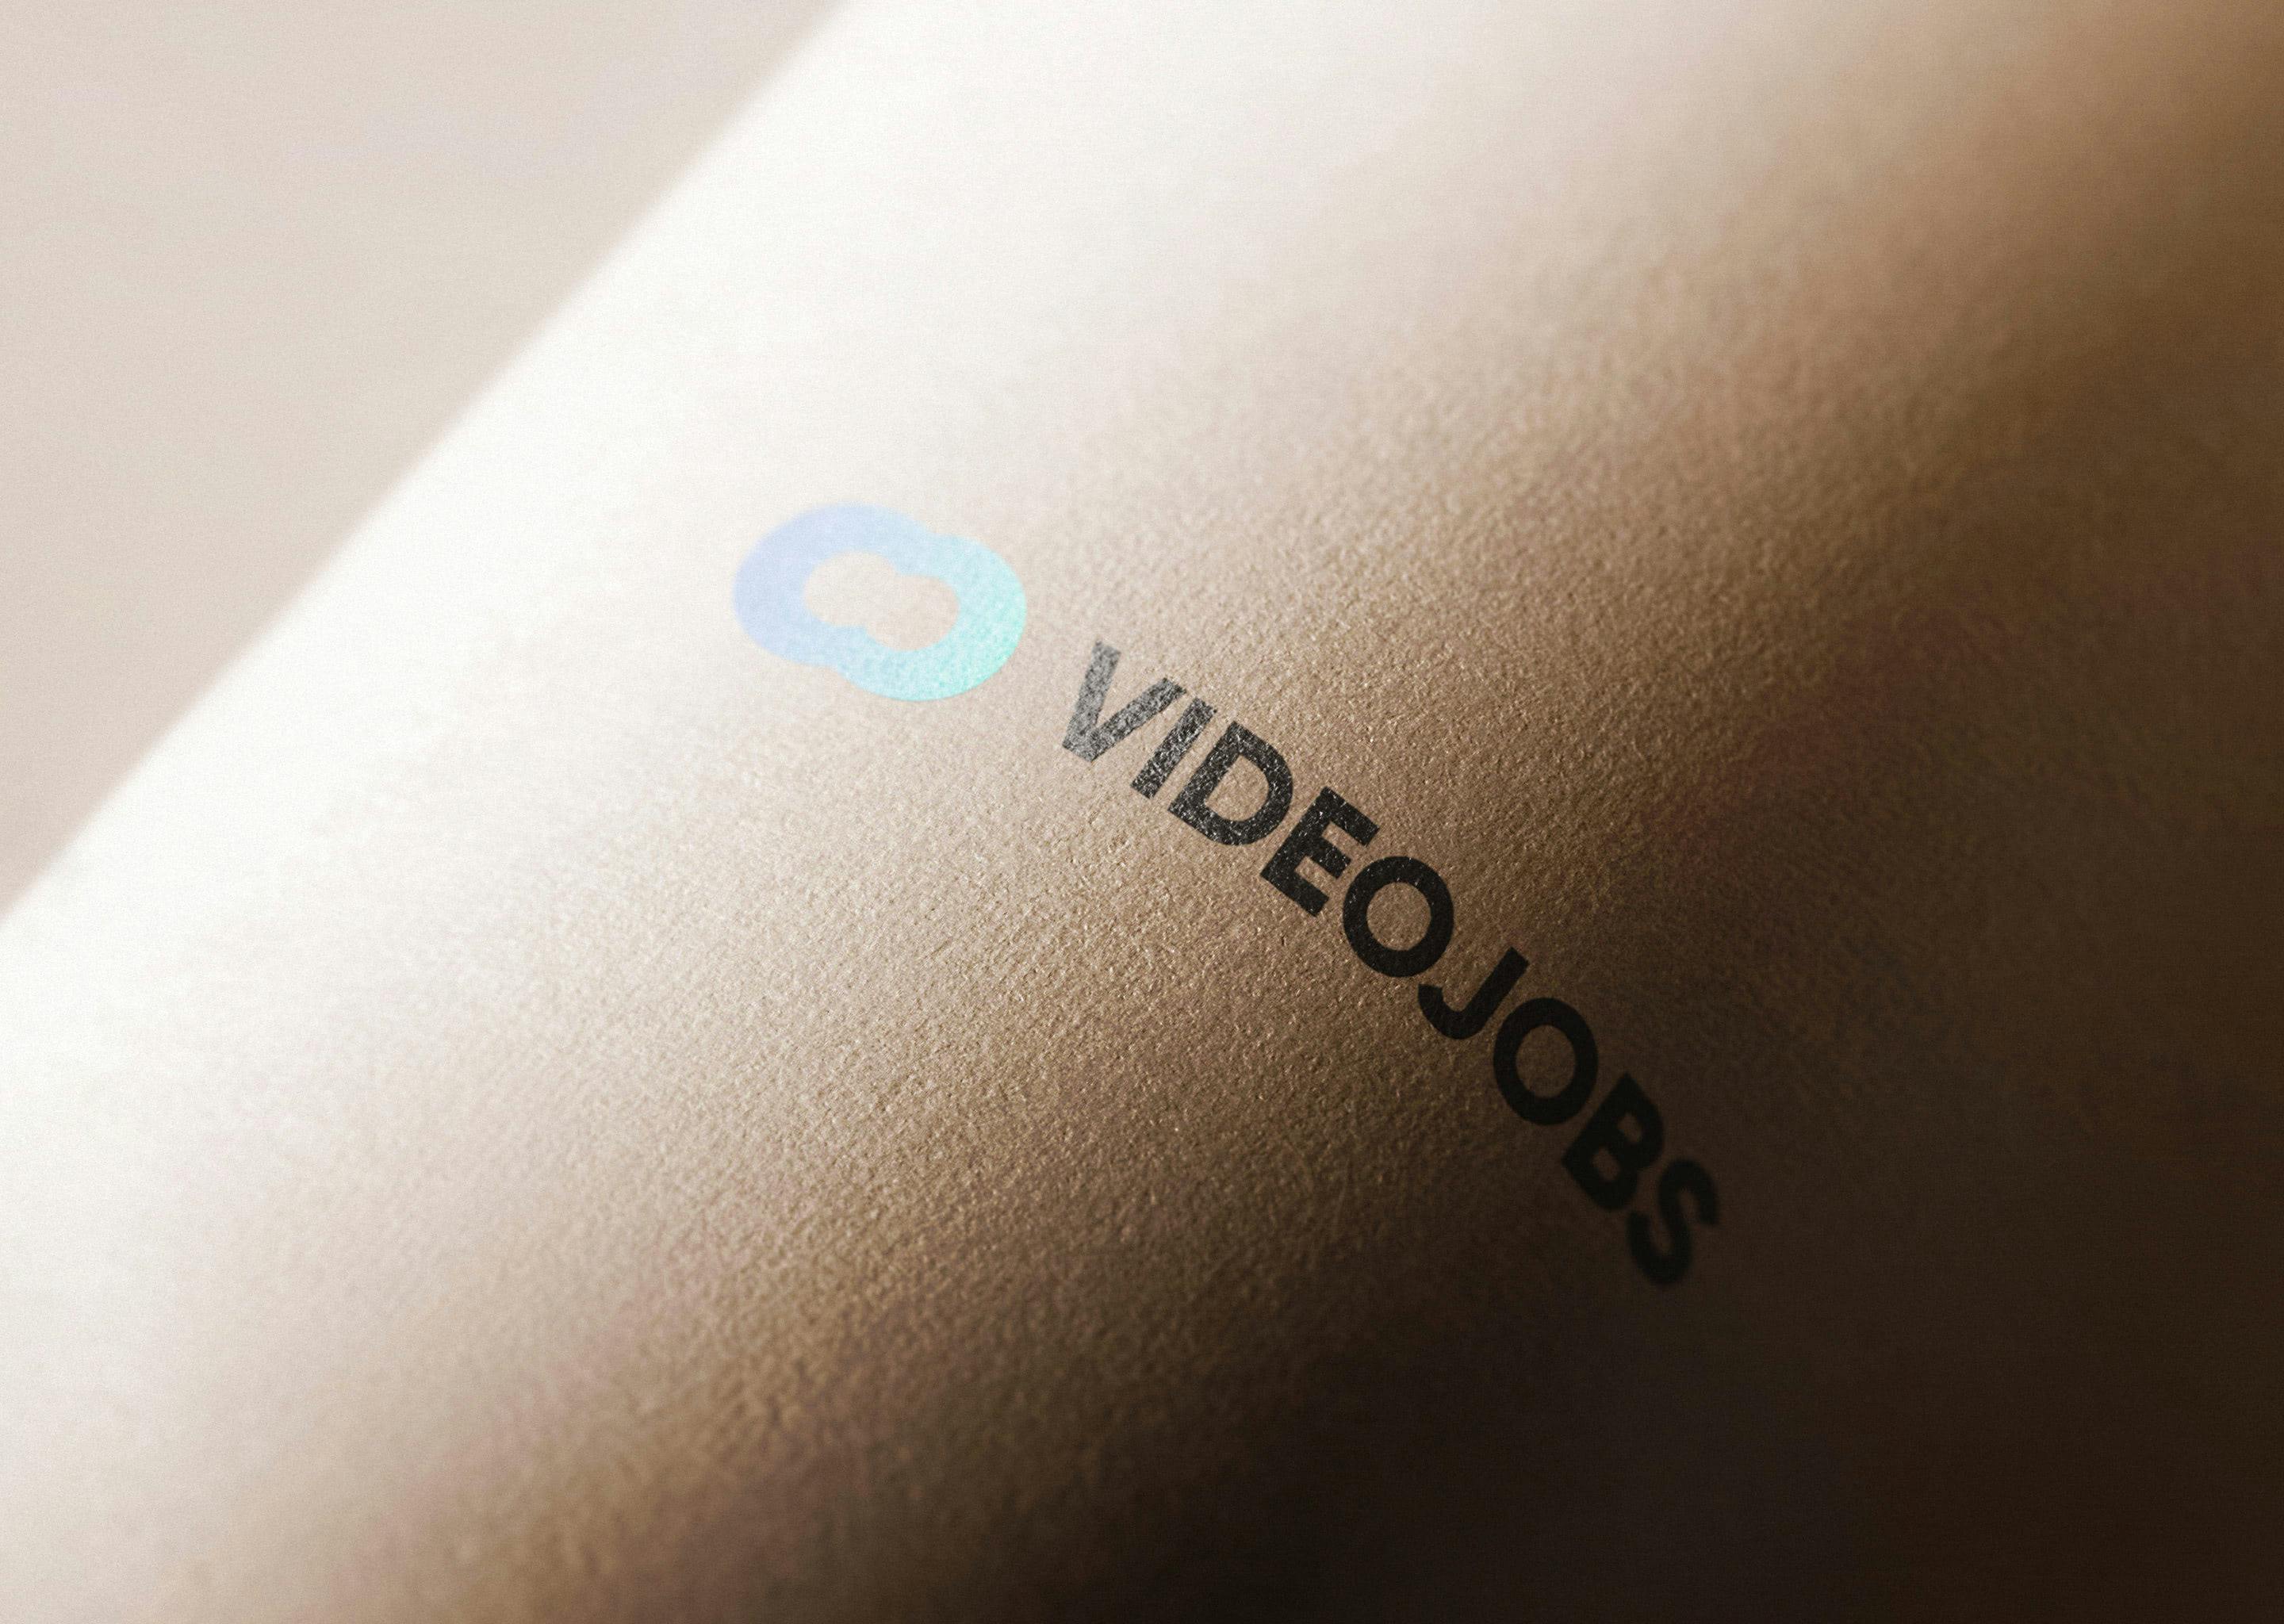 VideoJobs